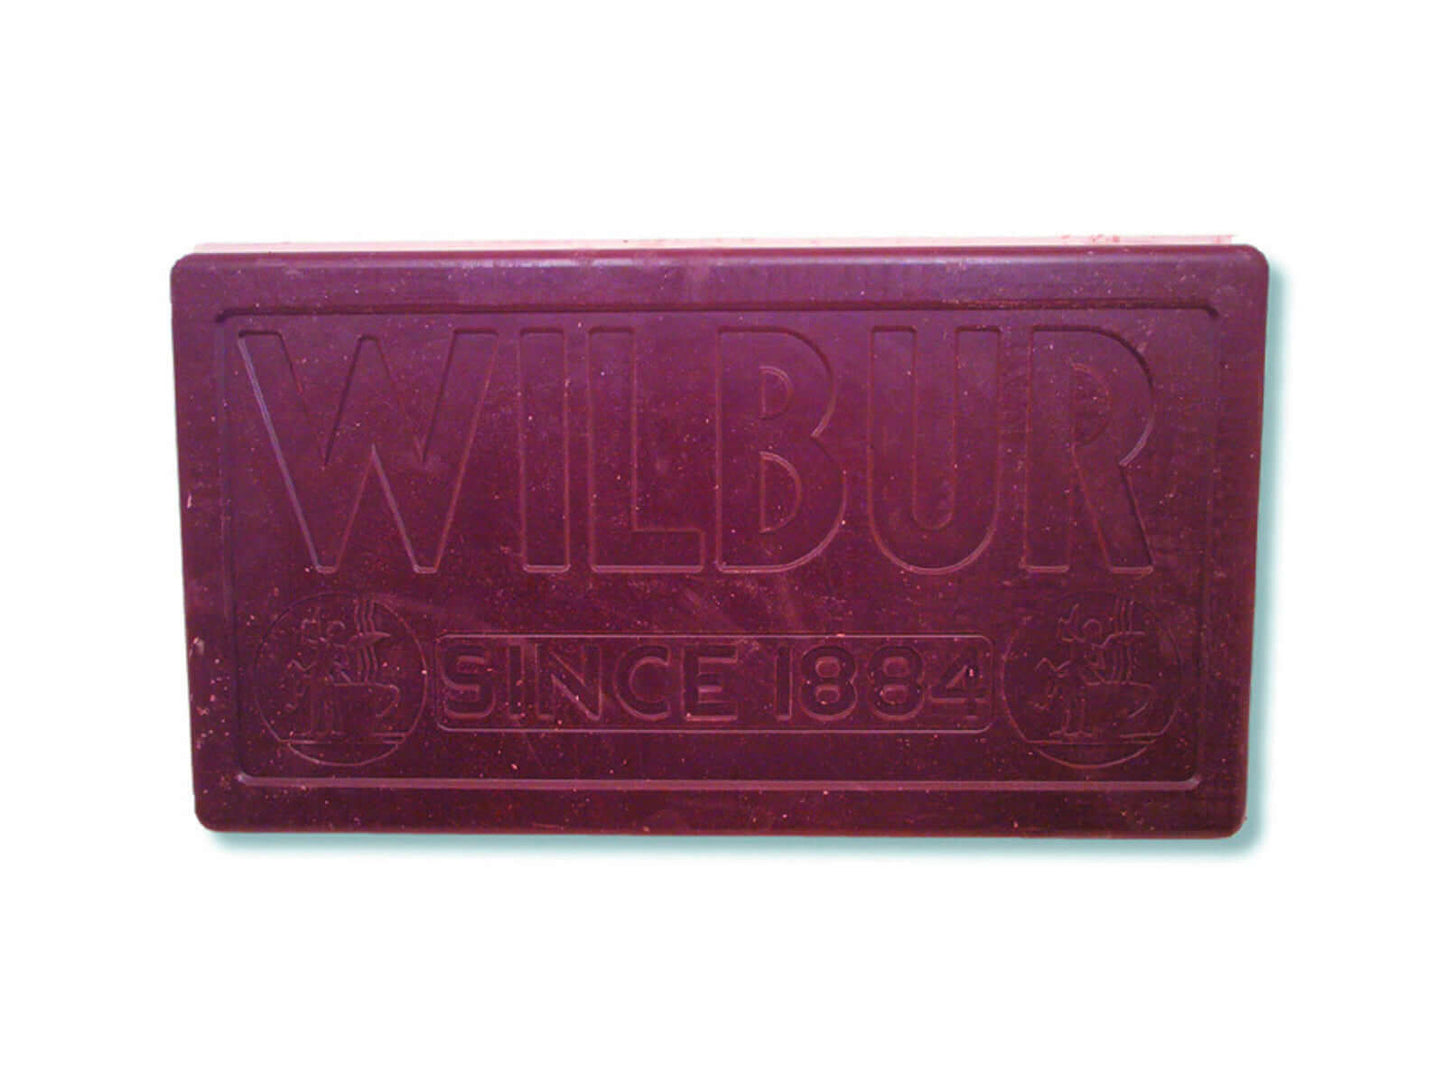 (special order only) Wilbur Warwick Dark Chocolate Coating 50lb